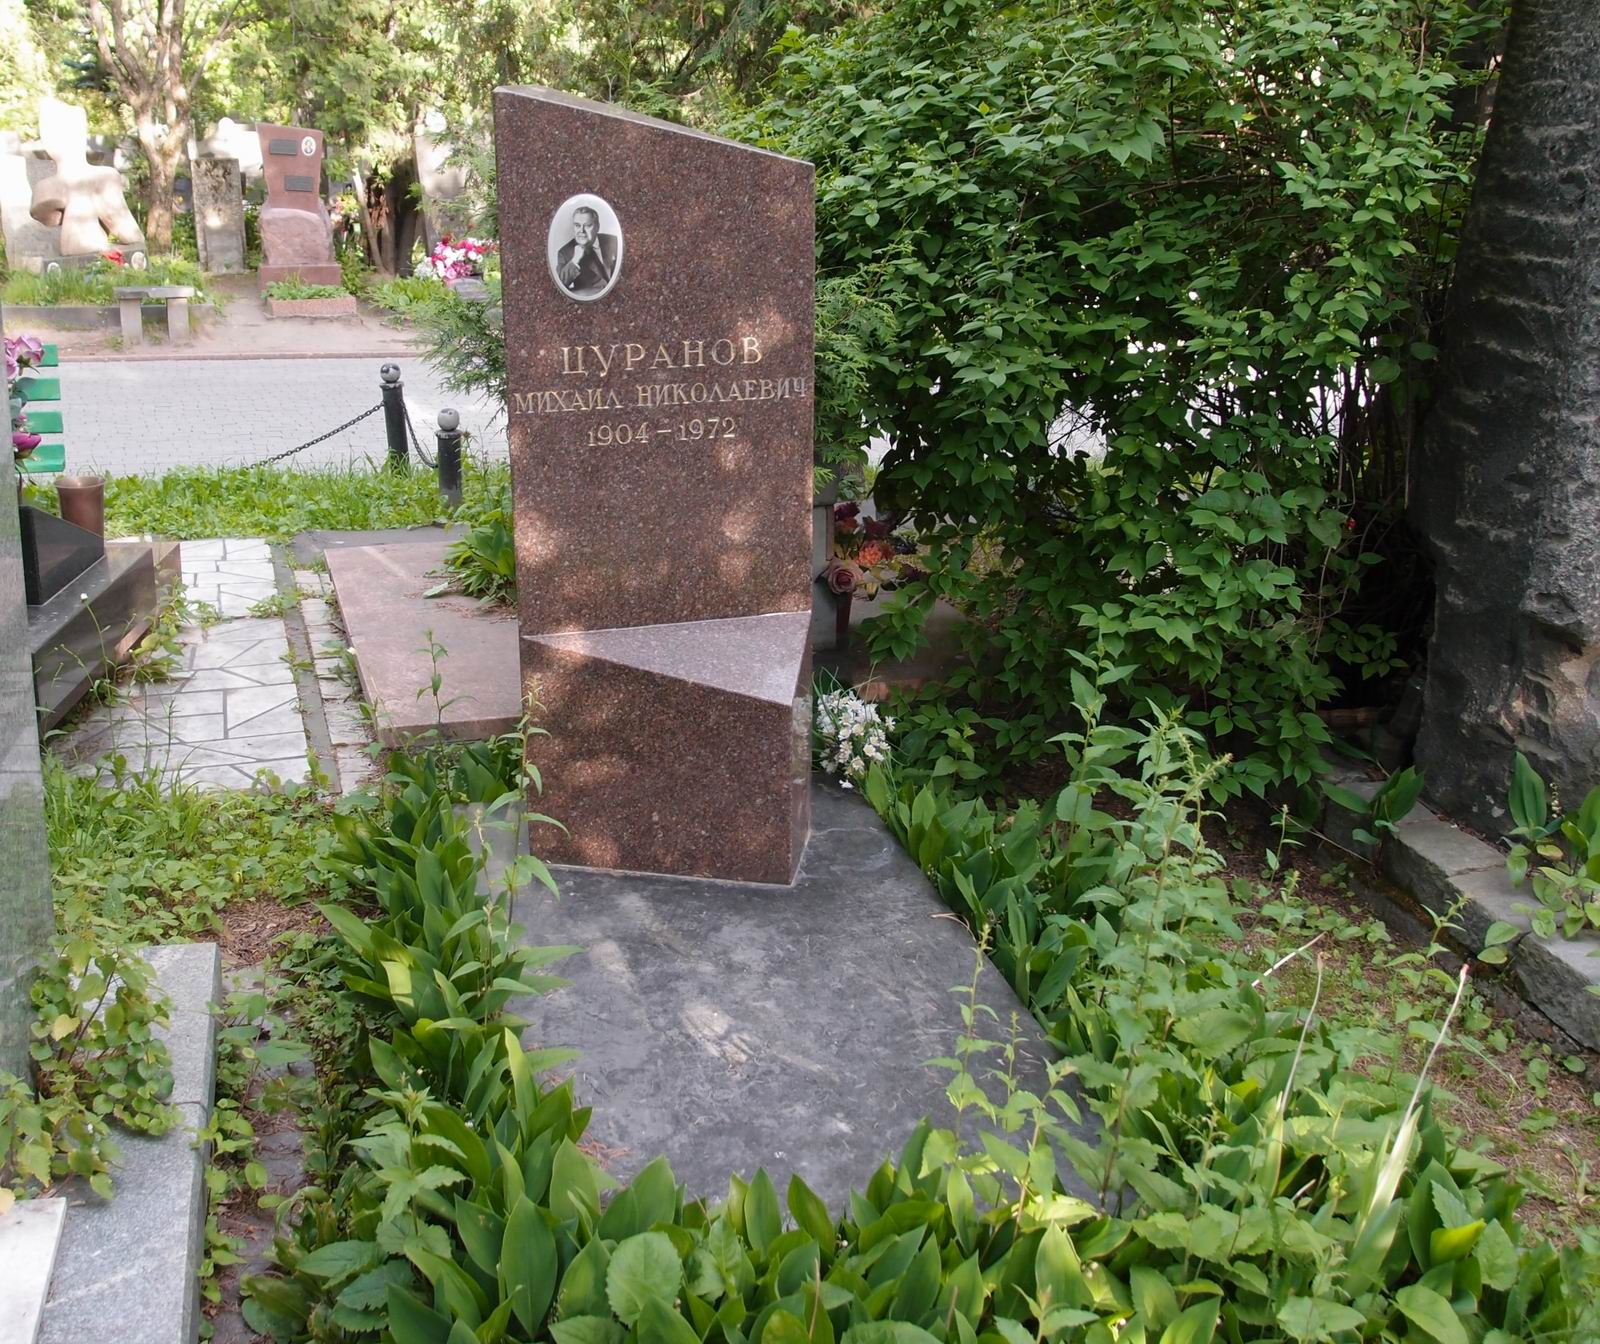 Памятник на могиле Цуранова М.Н. (1904–1972), по проекту Л.Цуранова, на Новодевичьем кладбище (7–2–20).